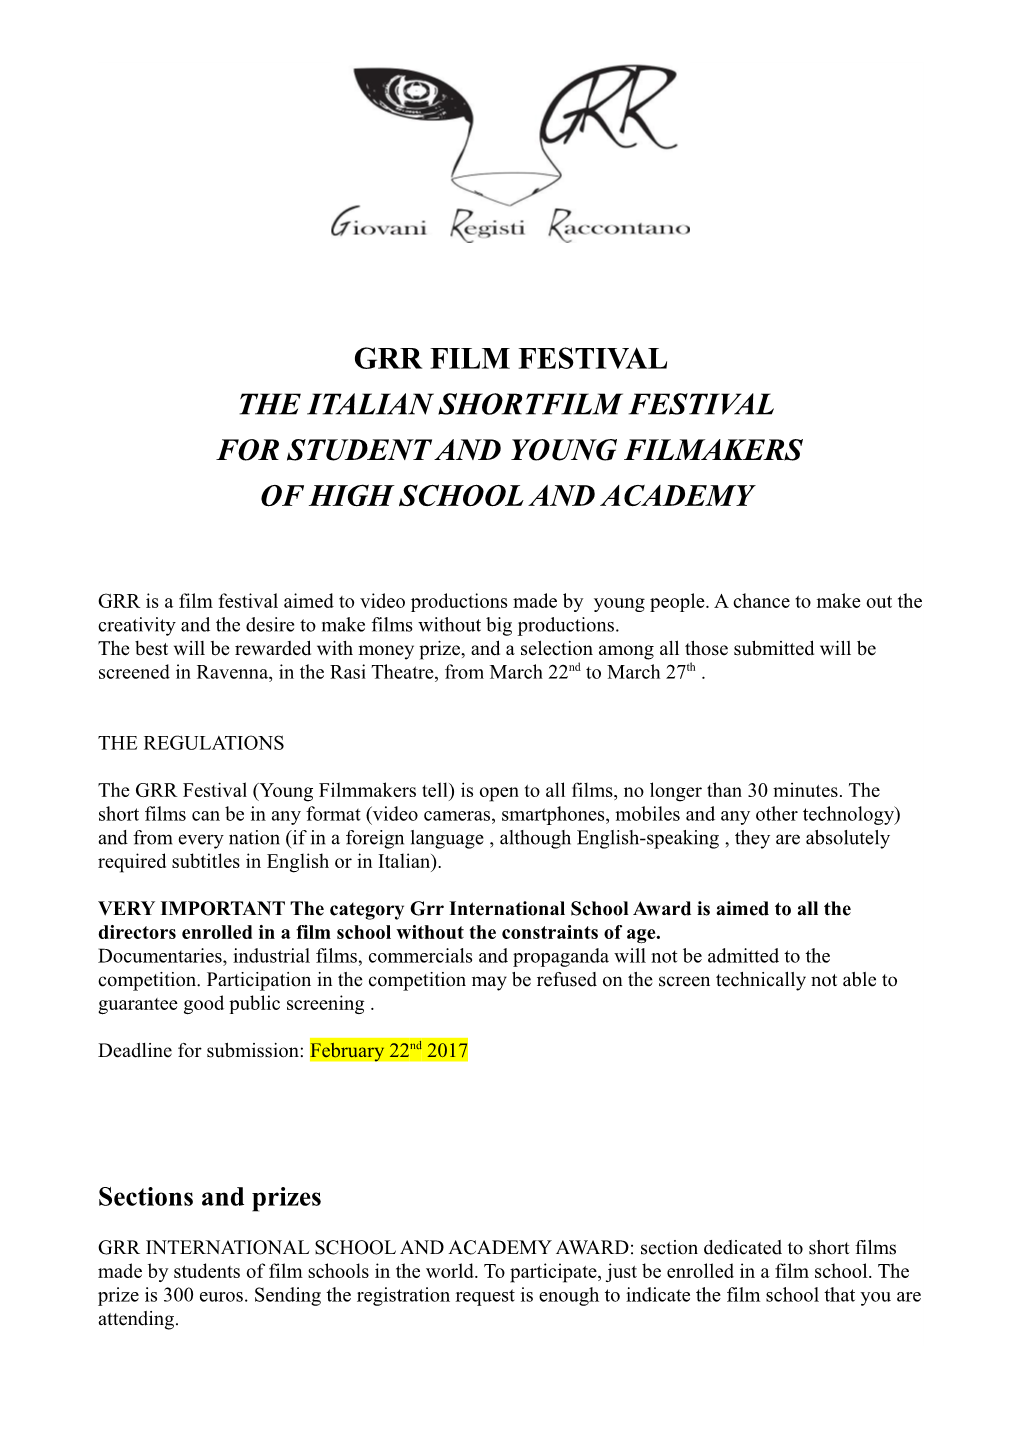 The Italian Shortfilm Festival